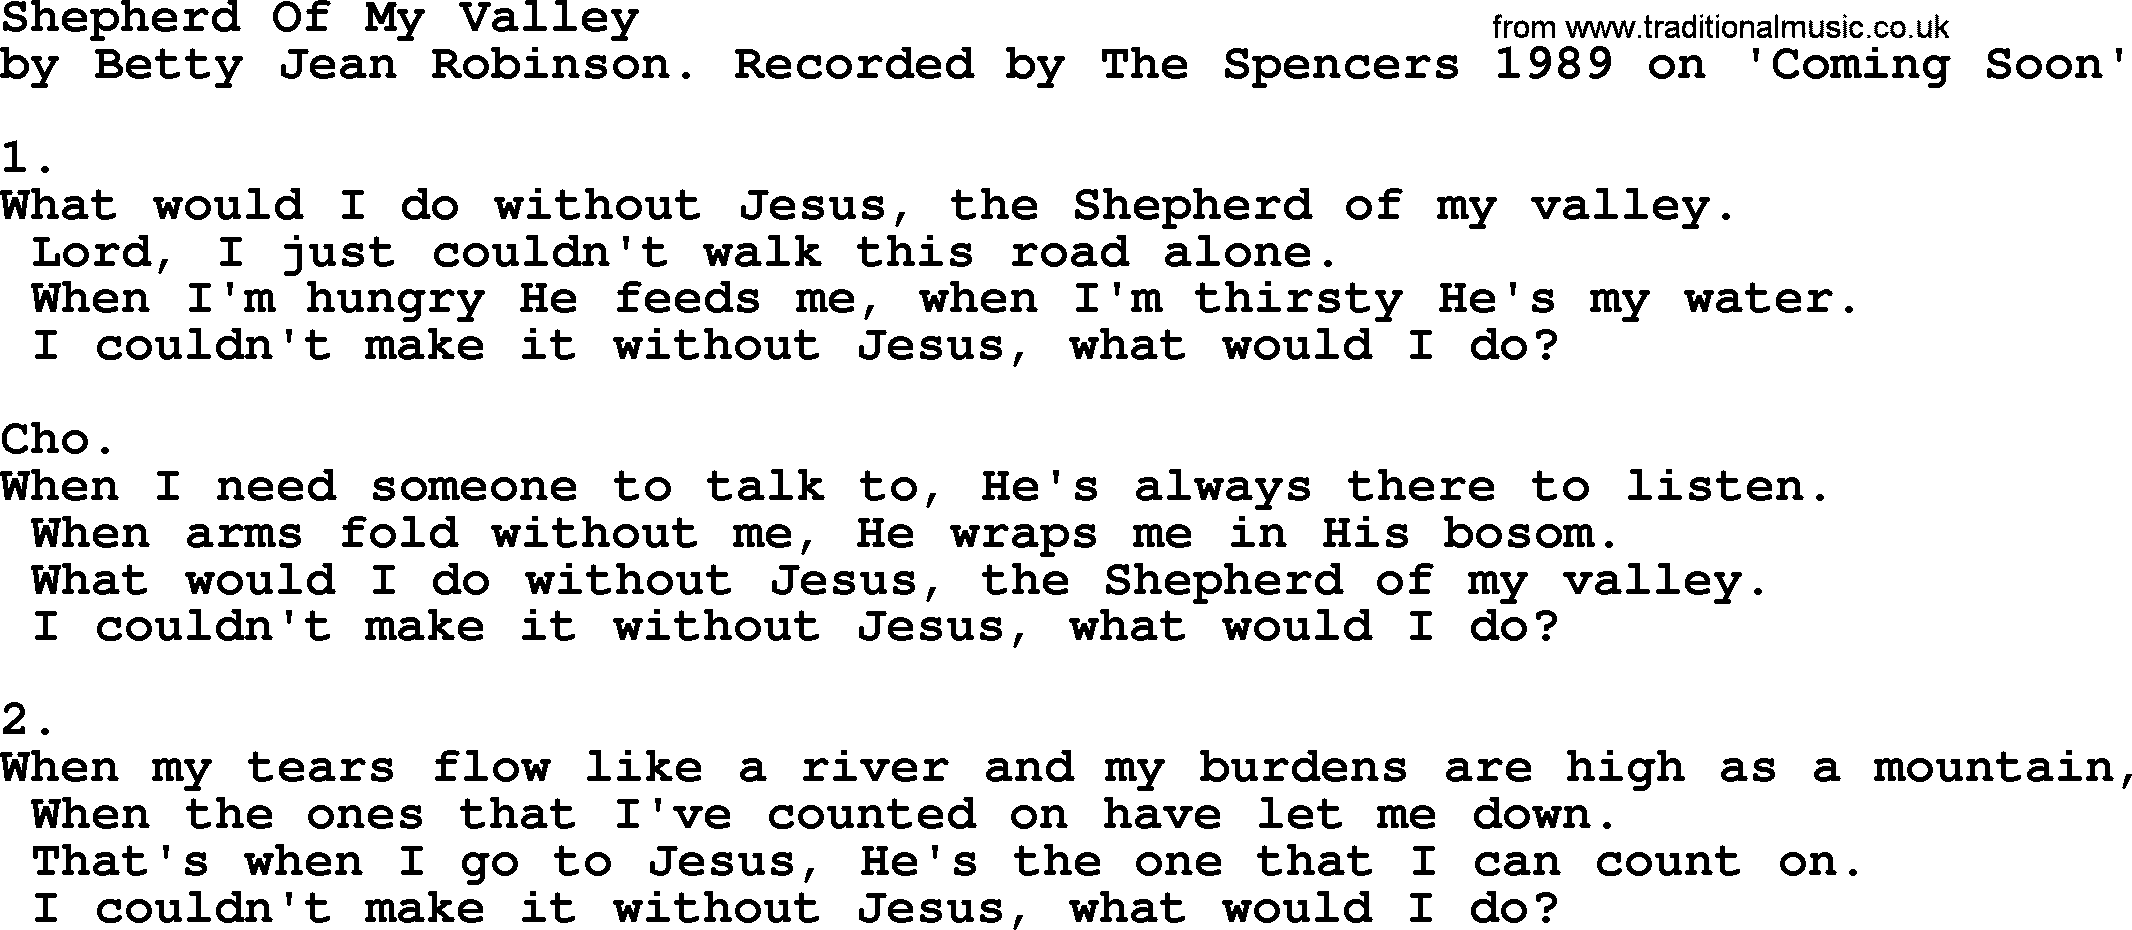 Apostolic & Pentecostal Hymns and Songs, Hymn: Shepherd Of My Valley lyrics and PDF